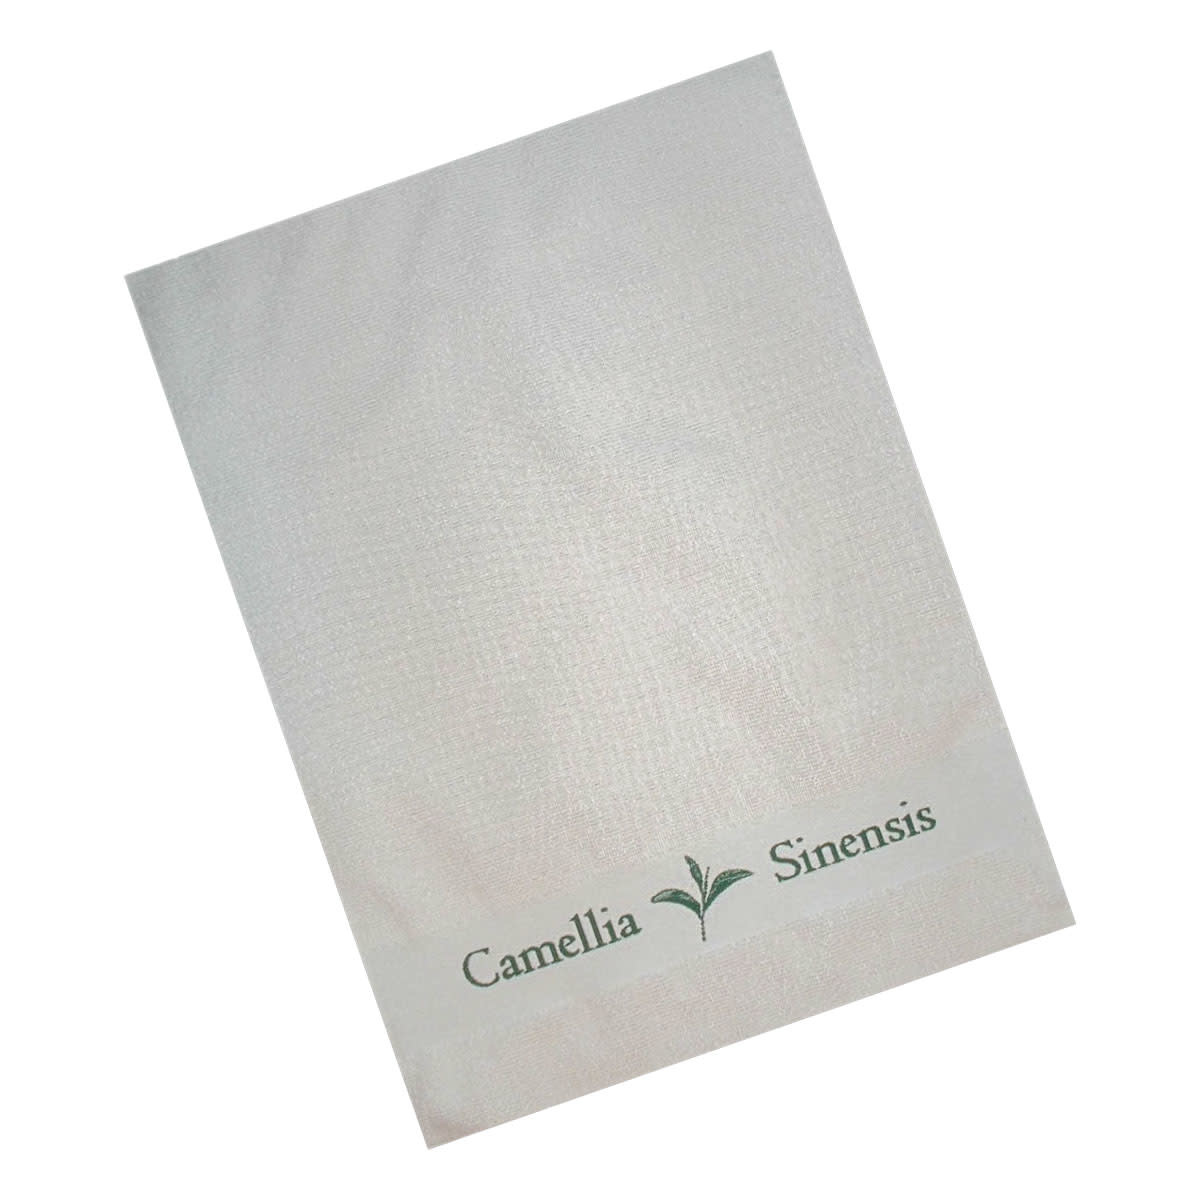 Textiles Tea Towel with Camellia Sinensis Border Design